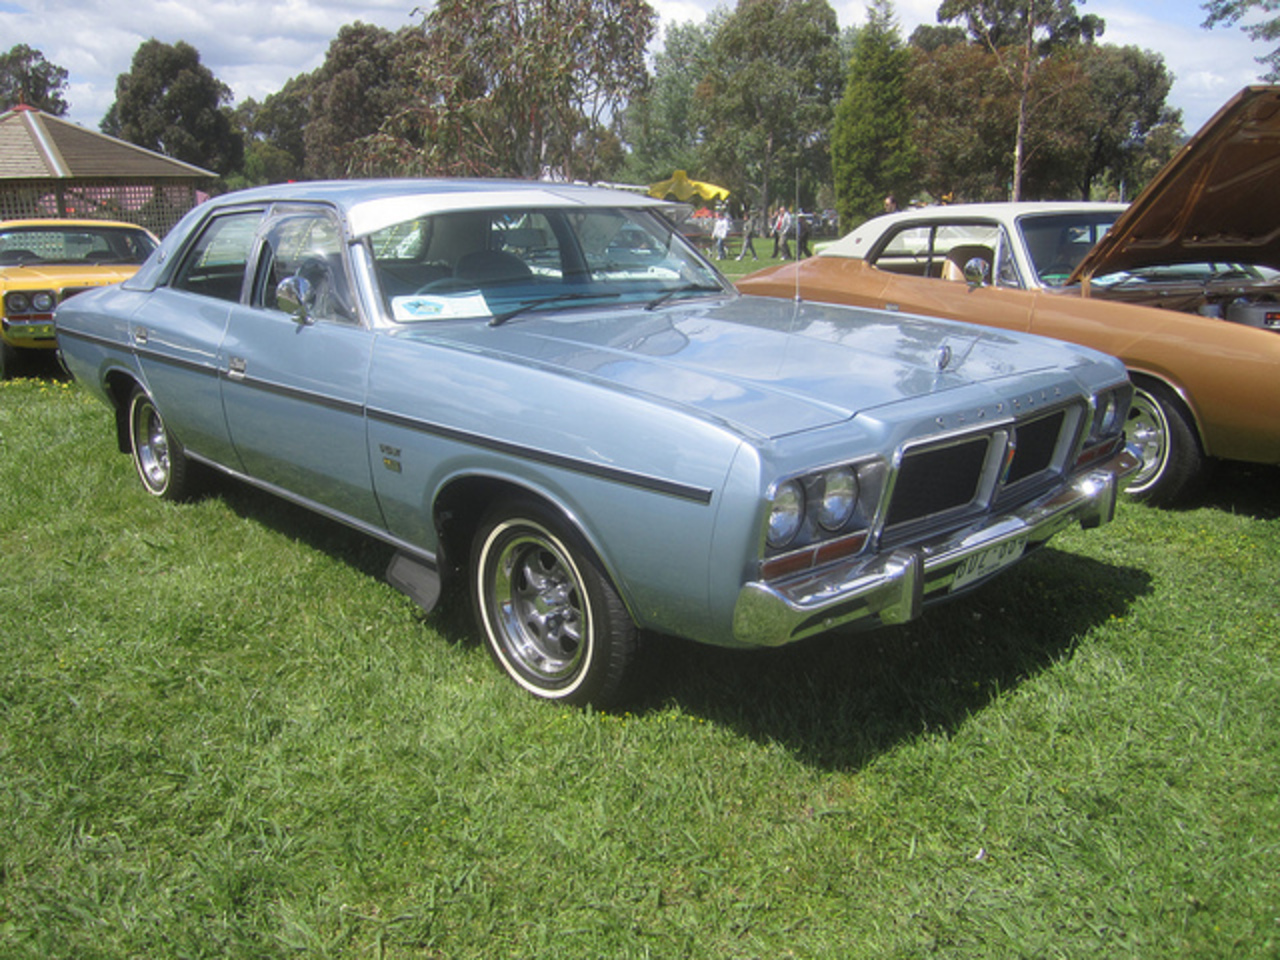 1979 Chrysler CM Valiant Sedan | Flickr - Photo Sharing!